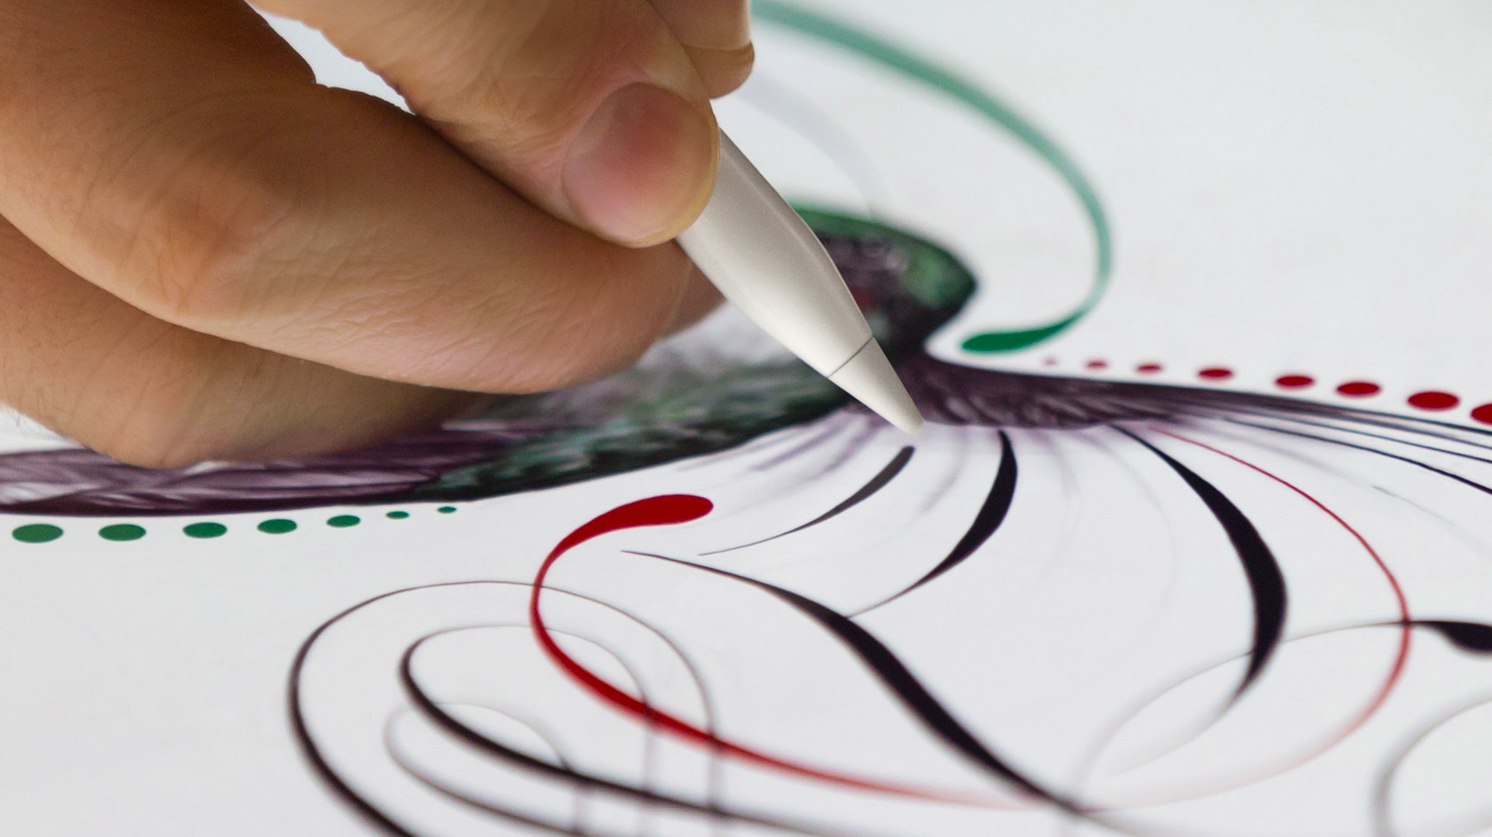 The new Apple Pencil stylus: Dream for designers + illustrators